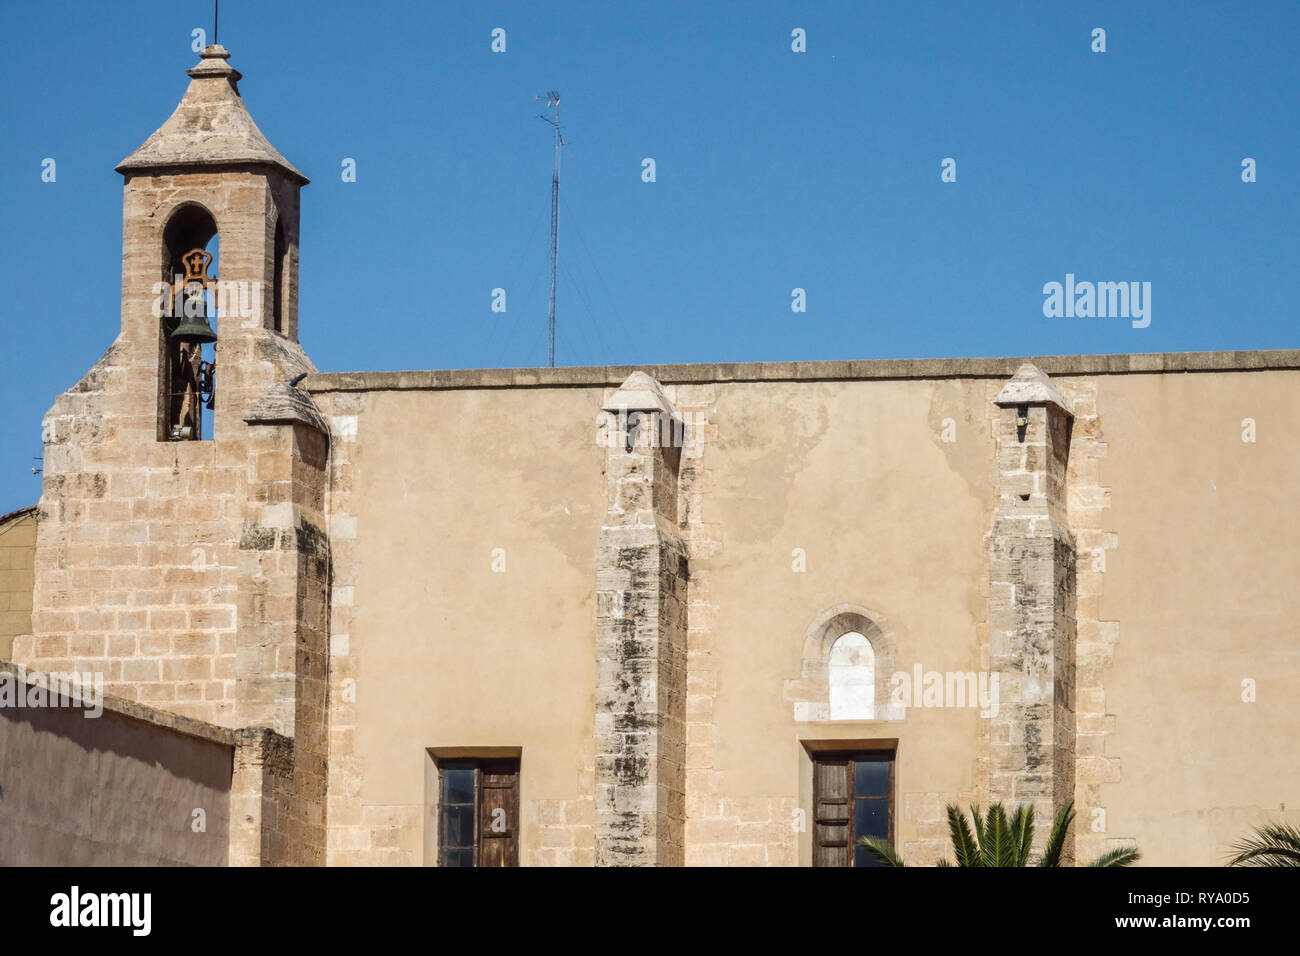 Real Monasterio de la Trinidad, Royal Monastery of the Trinity, Valencia, Spain Stock Photo